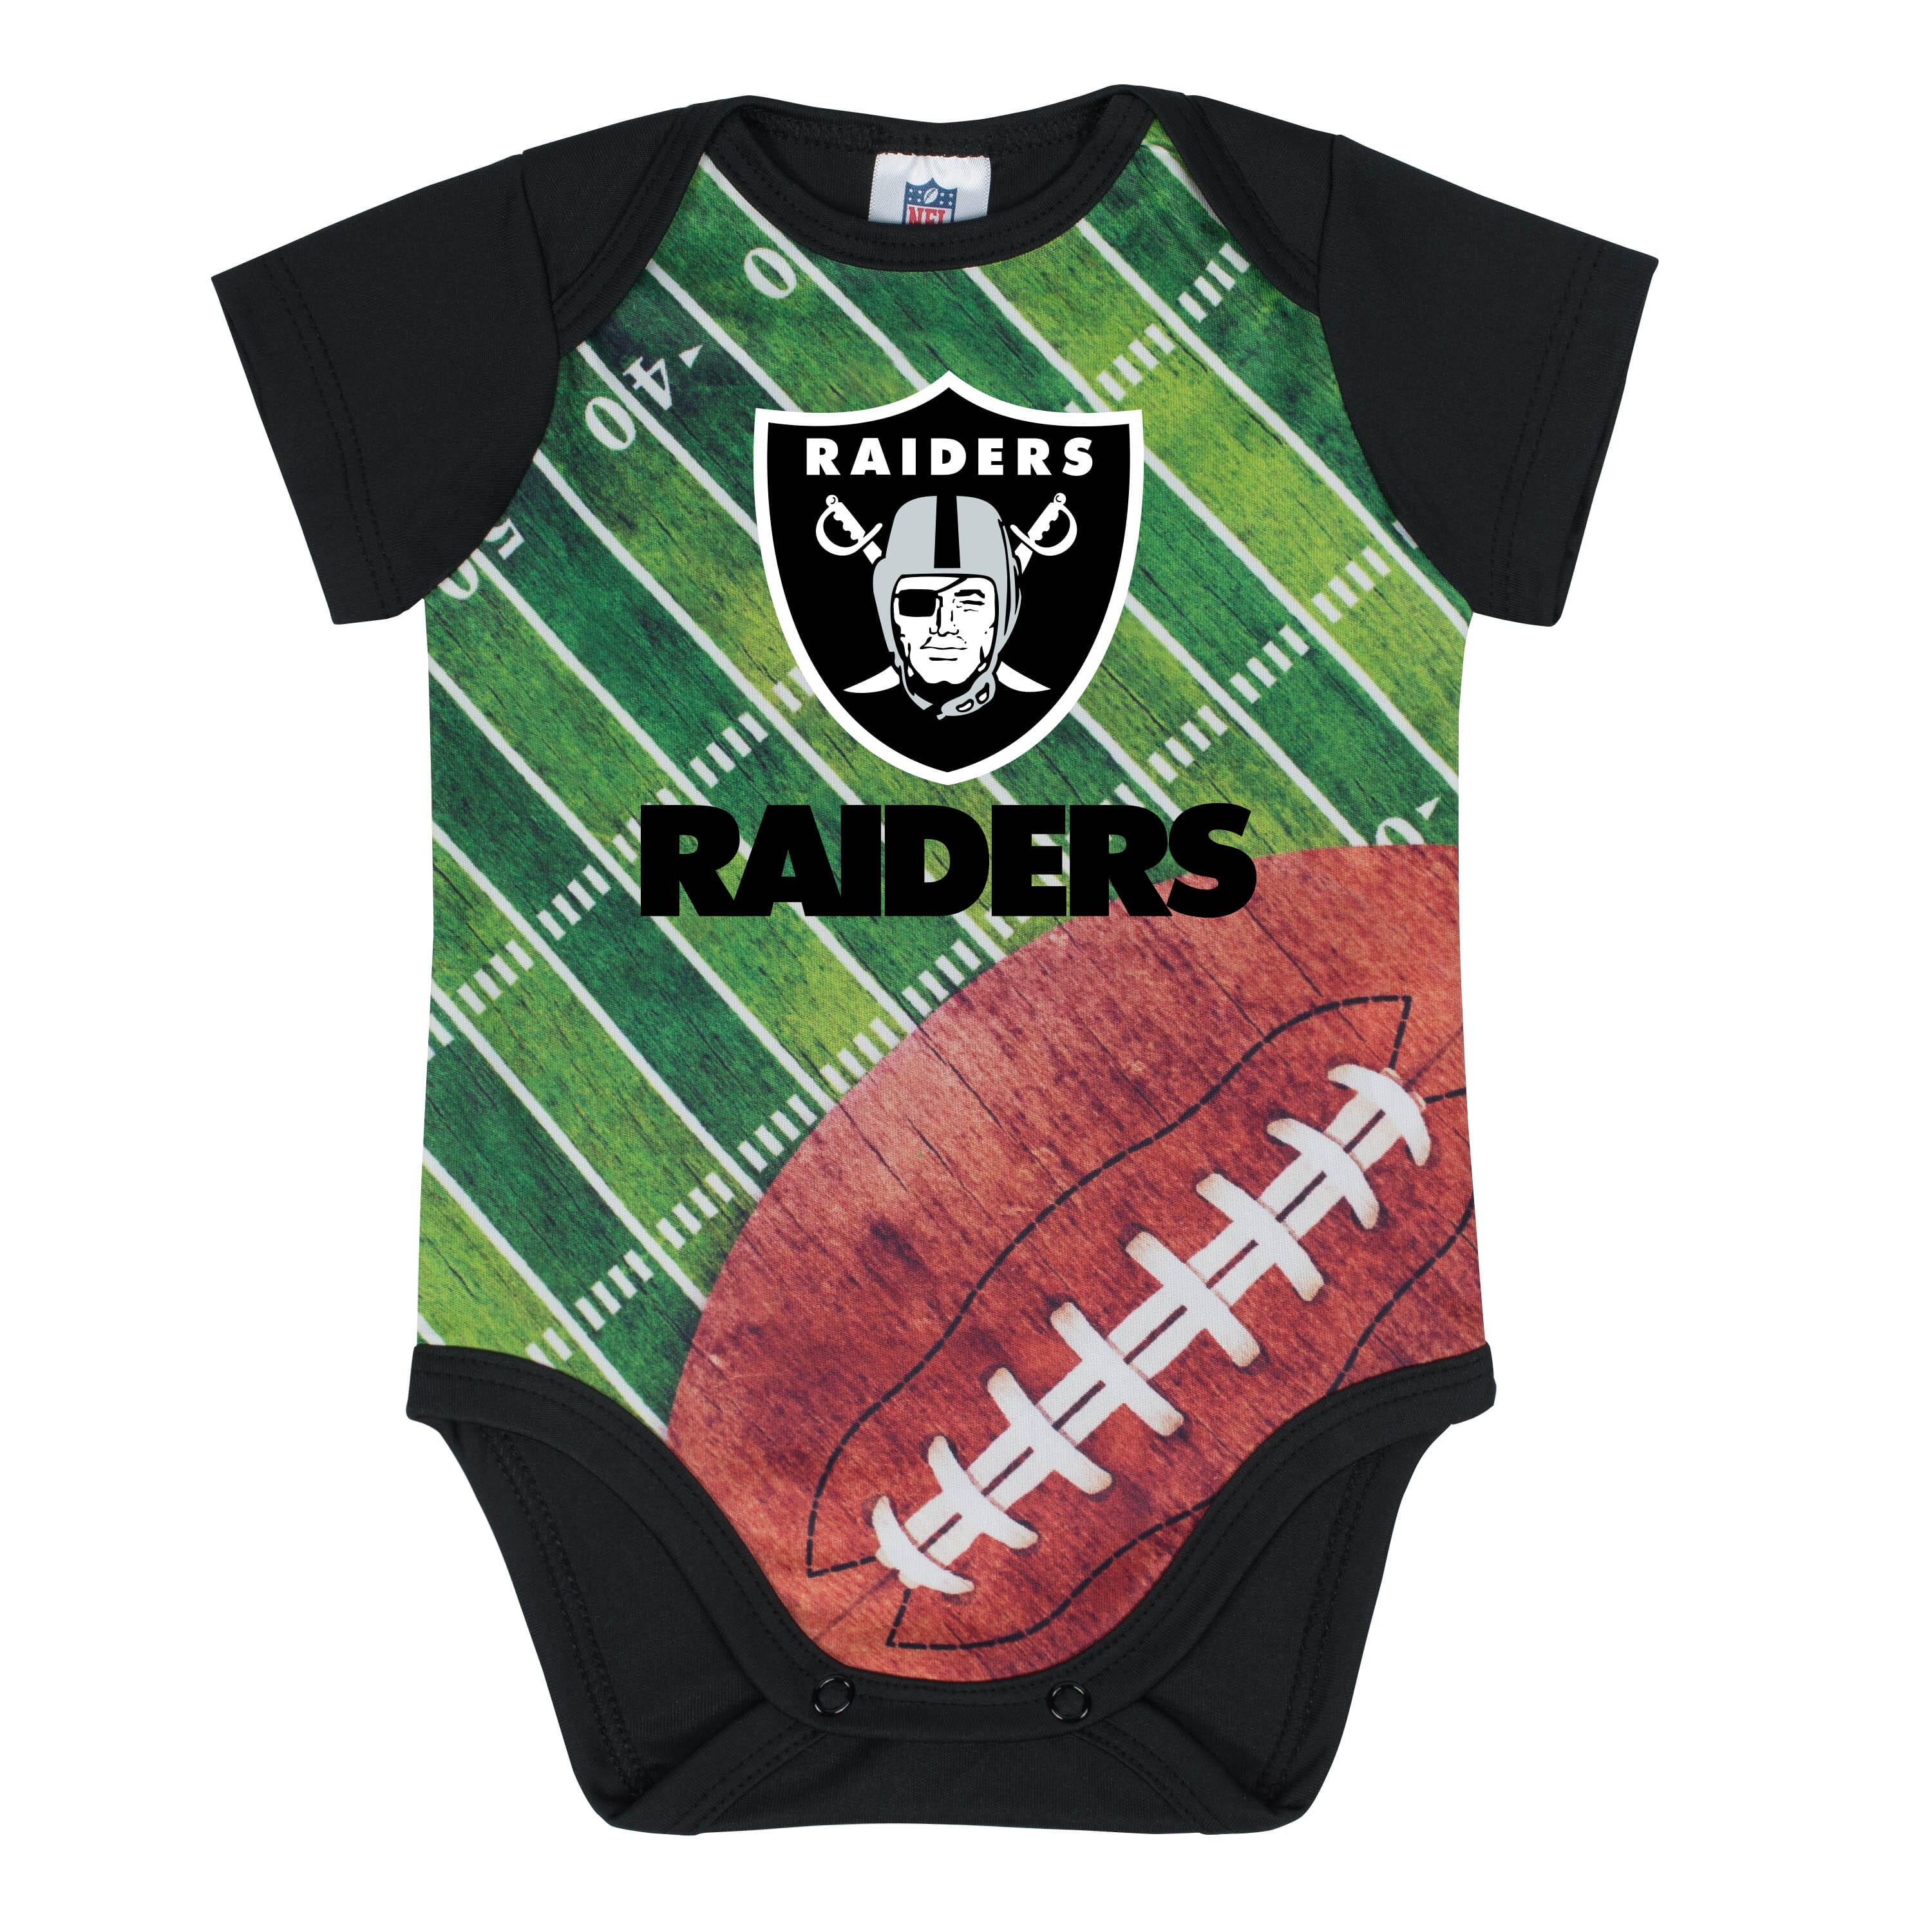 Raiders Baby Boys Jersey Bodysuit